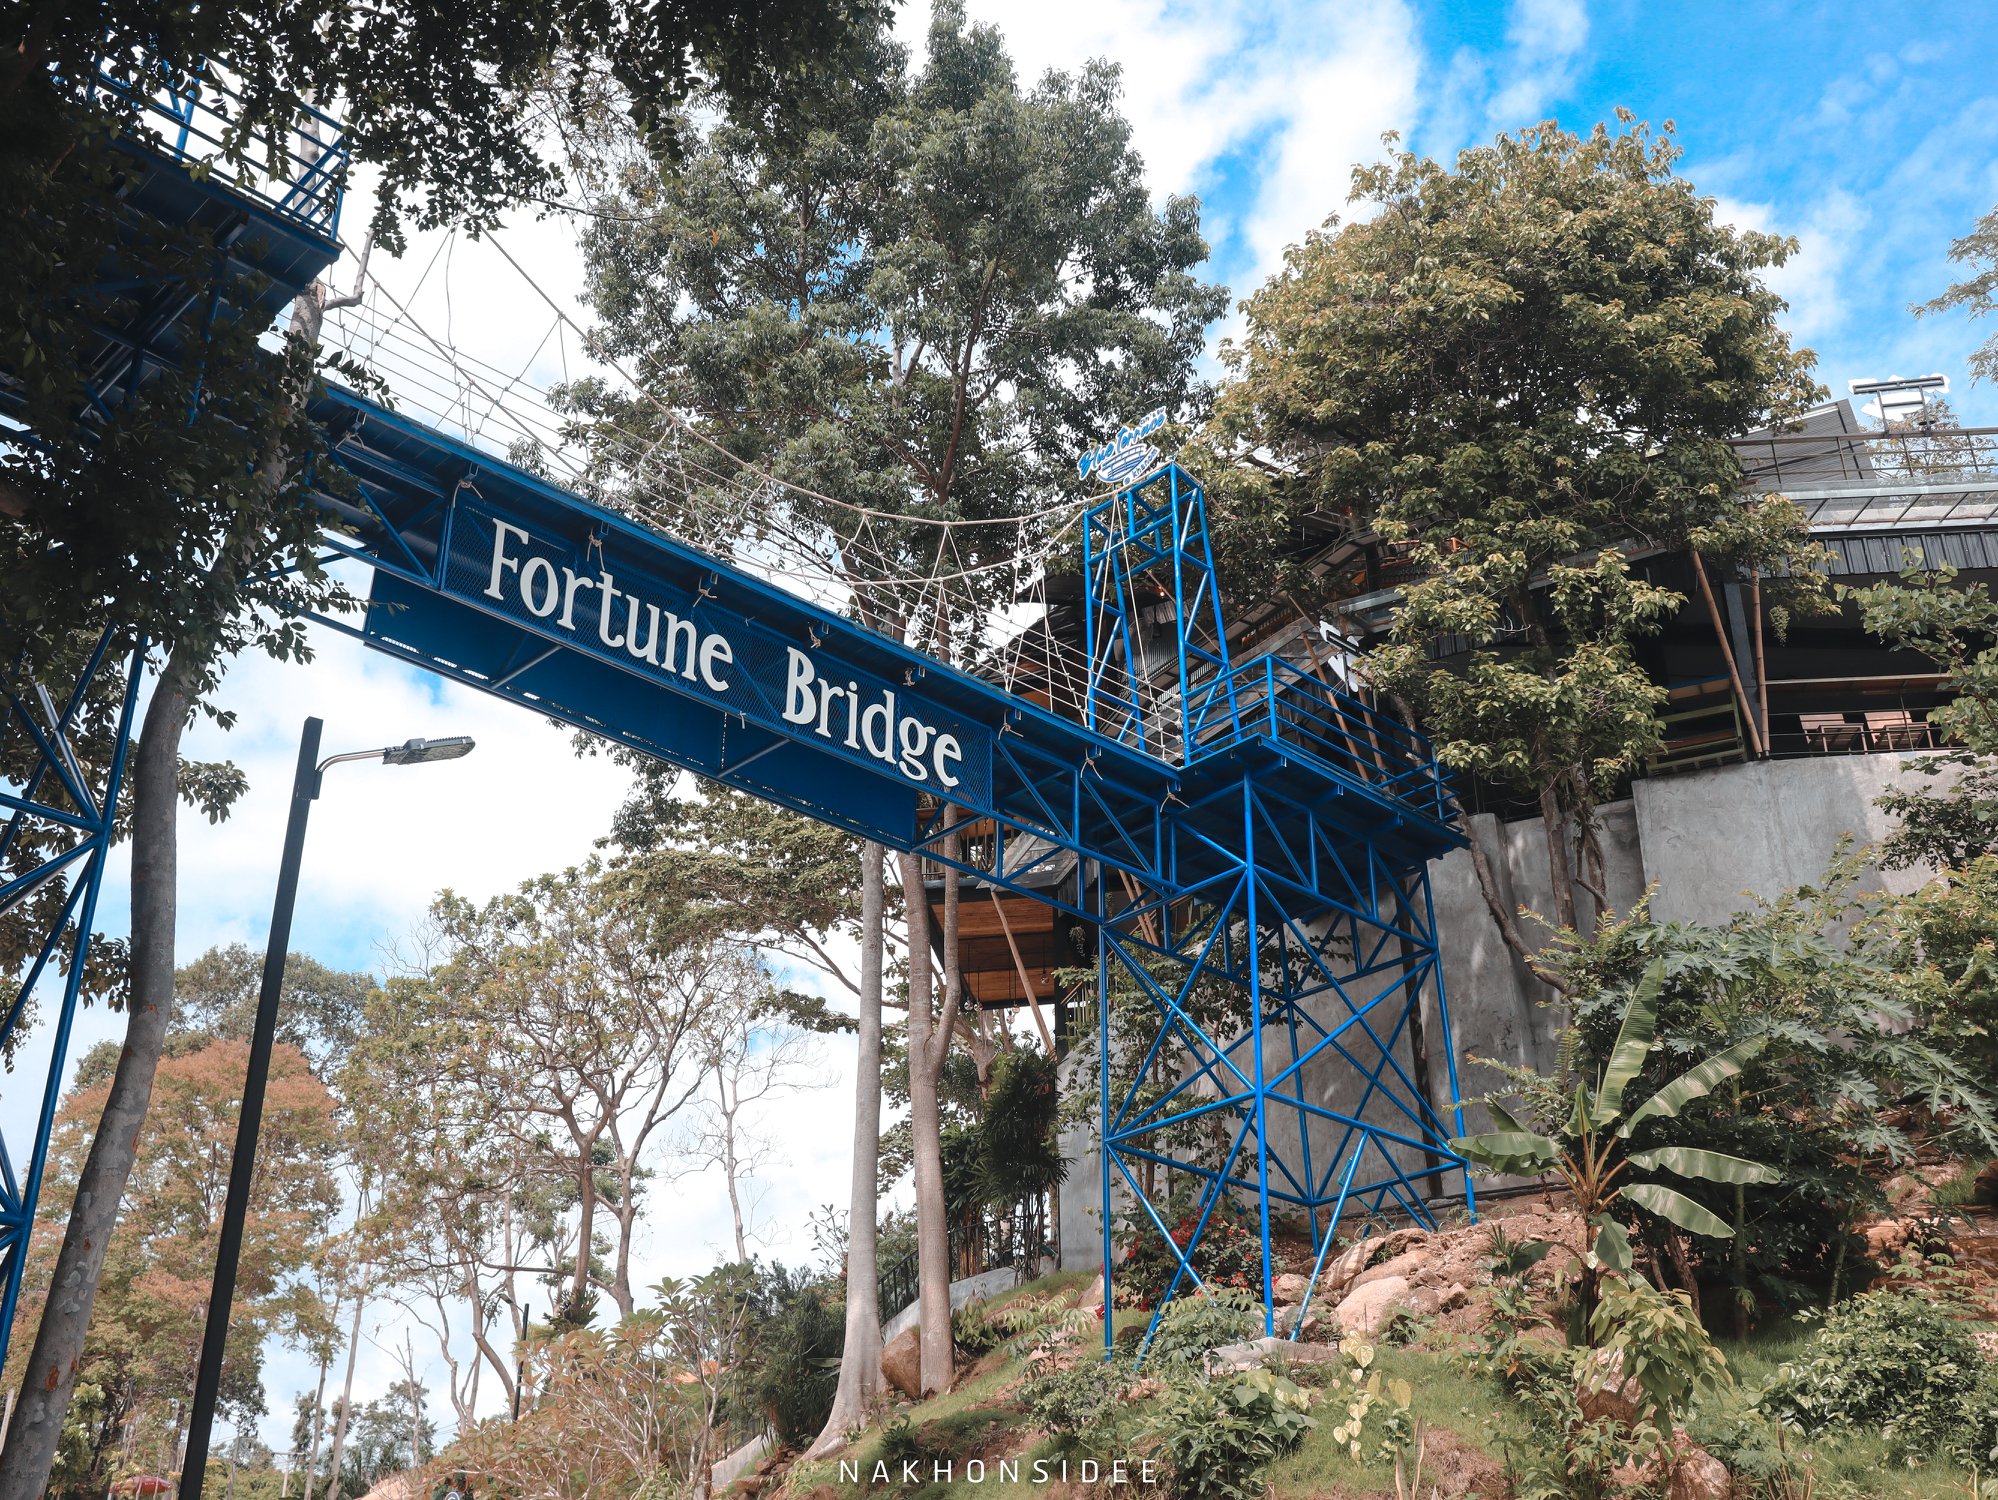  Fortune-Bridge-Blueterrace-ขนอม ขนอม,นครศรีธรรมราช,ฺBlueterrace,ของกิน,ร้านอาหาร,คาเฟ่,อร่อย